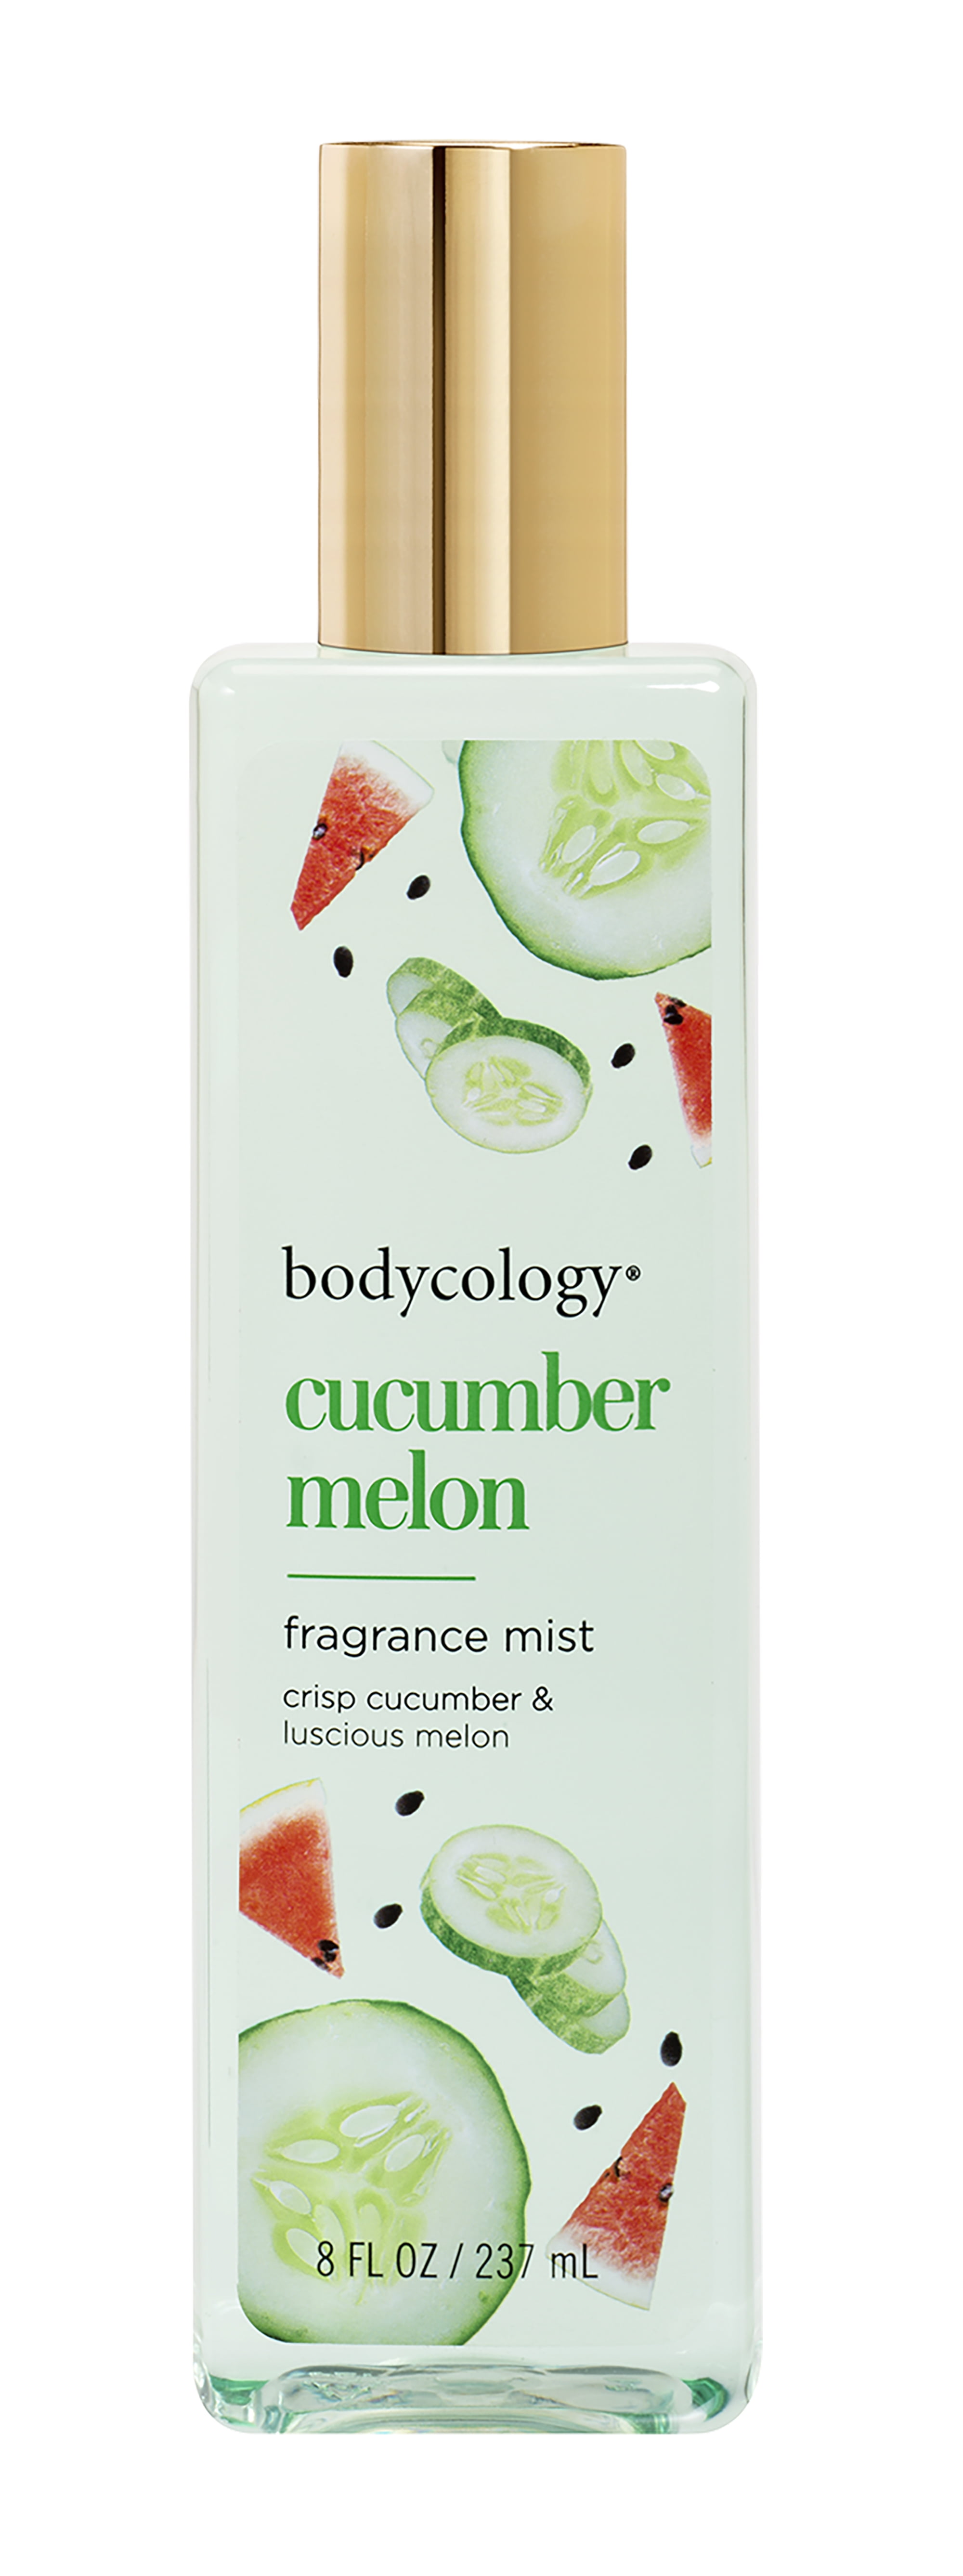 Bodycology Cucumber Melon Body Mist, 8 fl.oz.